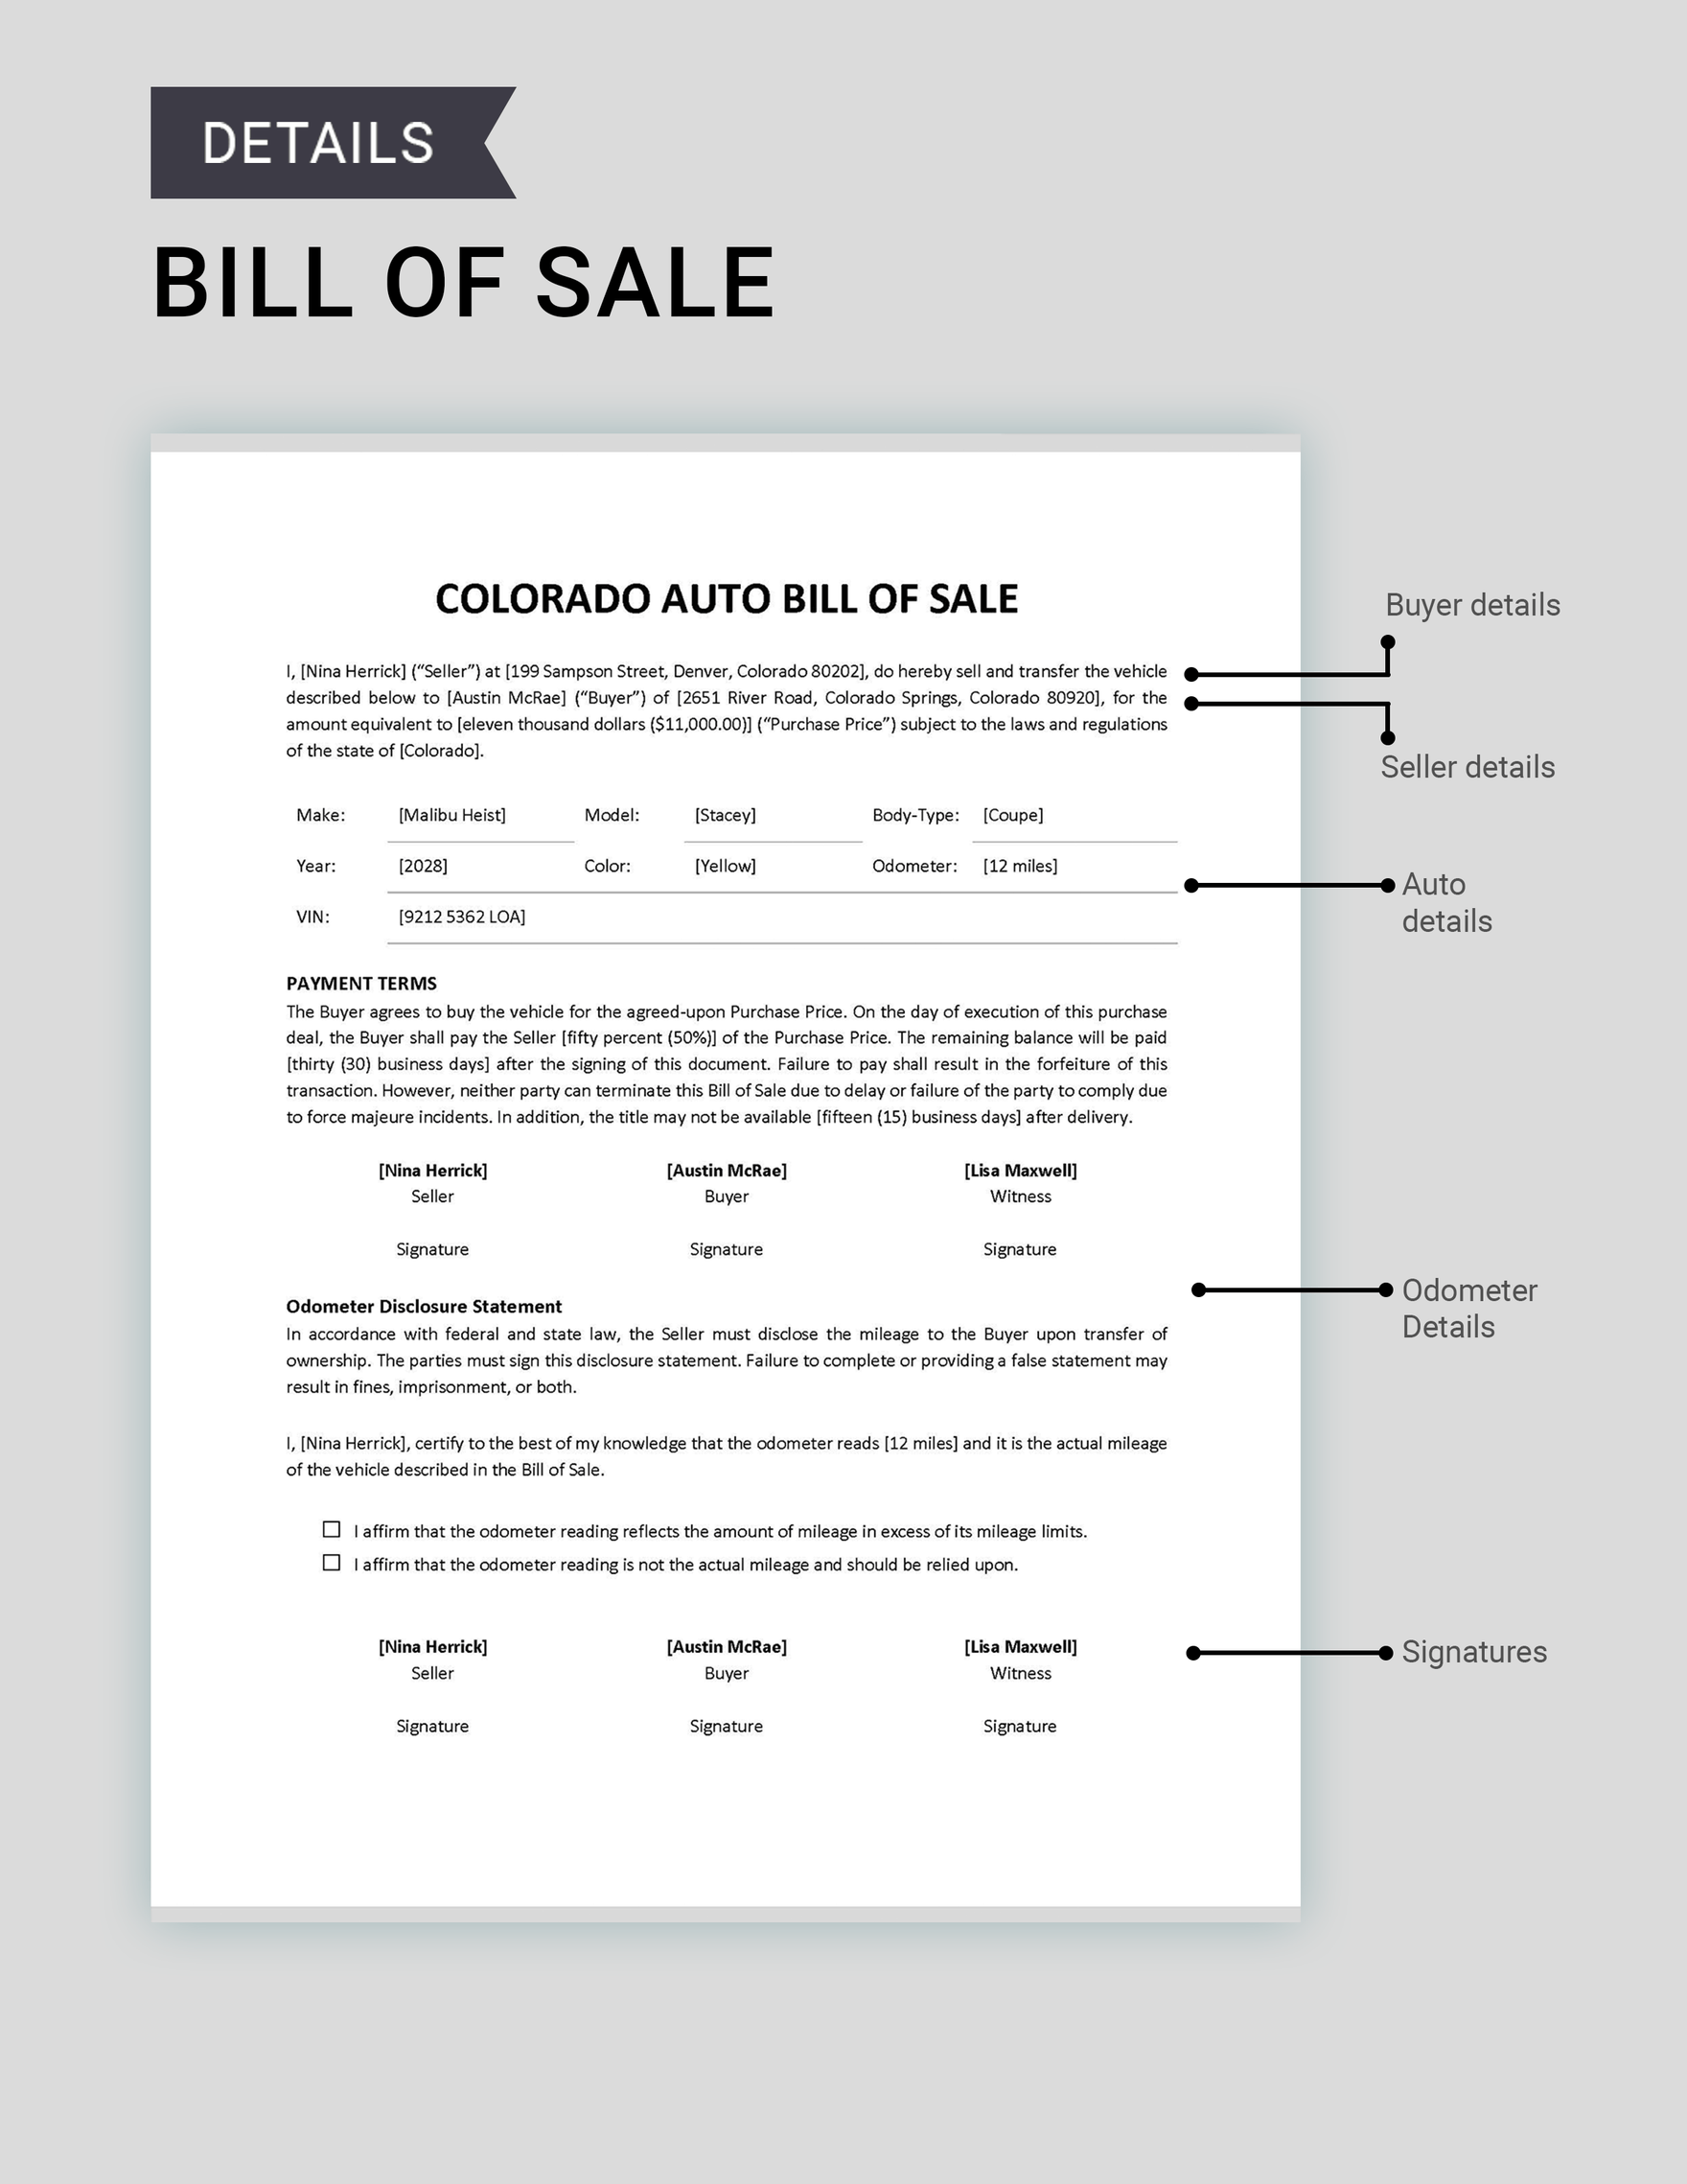 Colorado Auto Bill of Sale Template